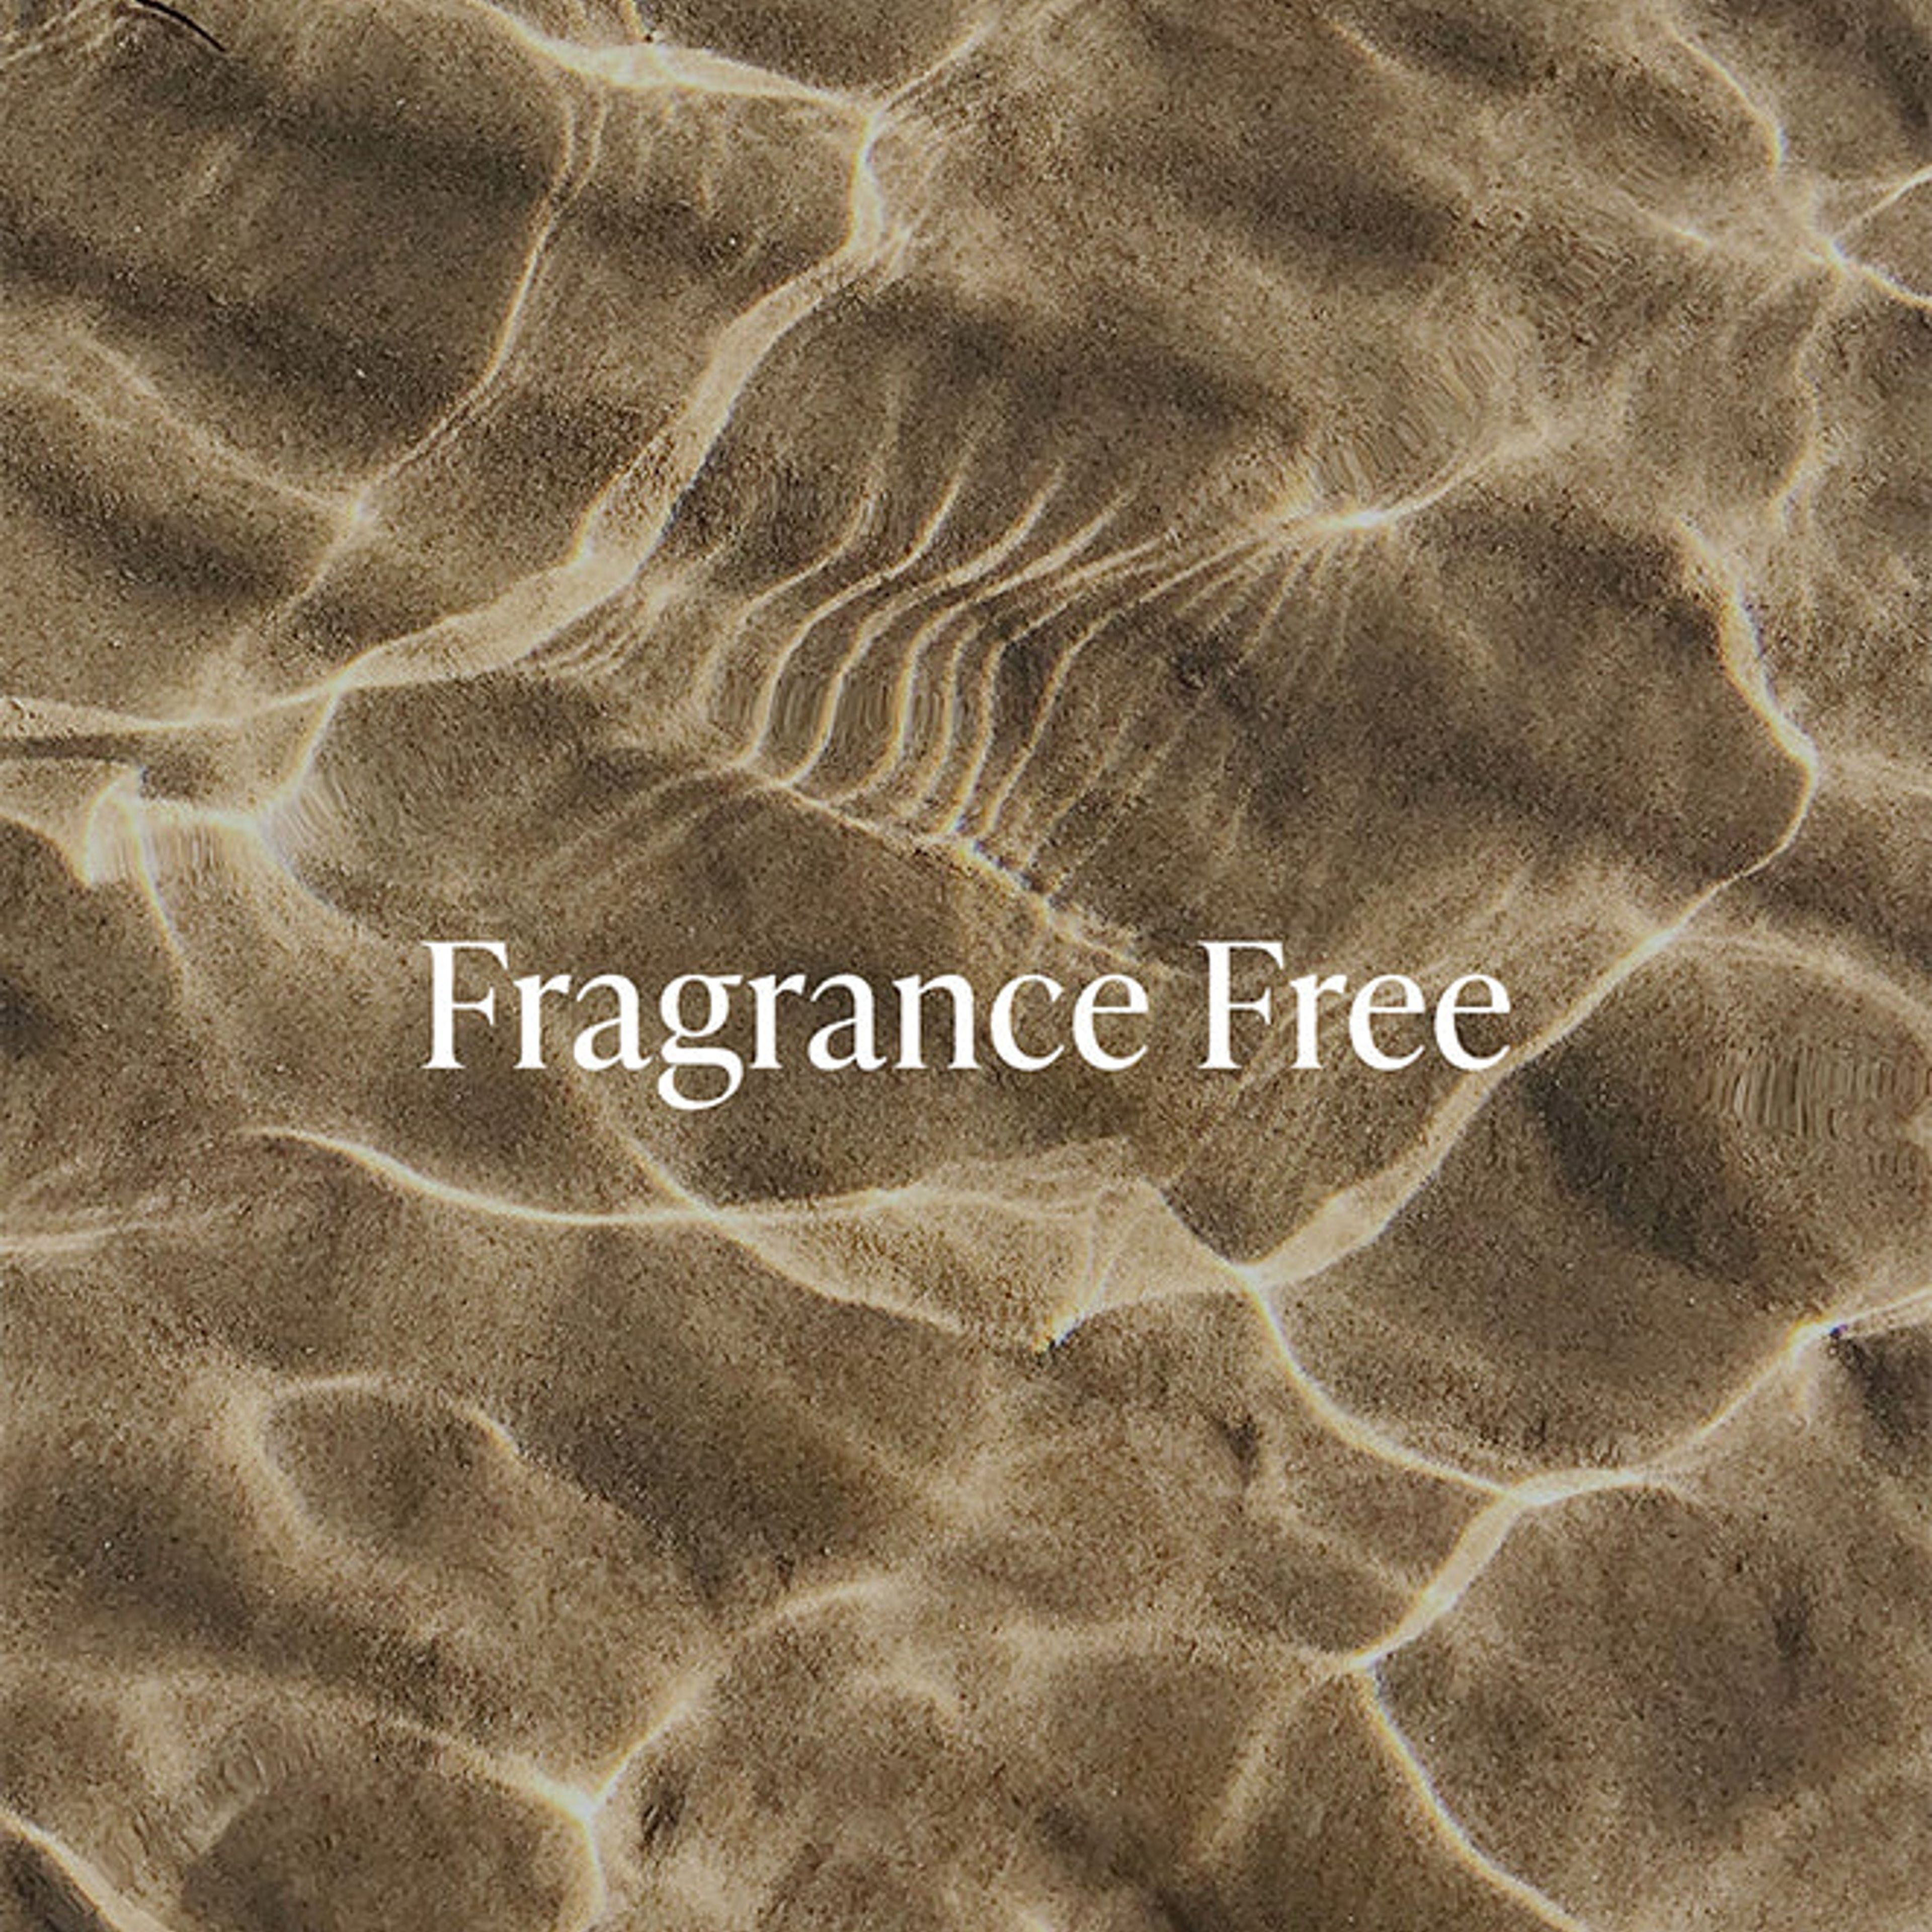 Fragrance Free - Body Lotion